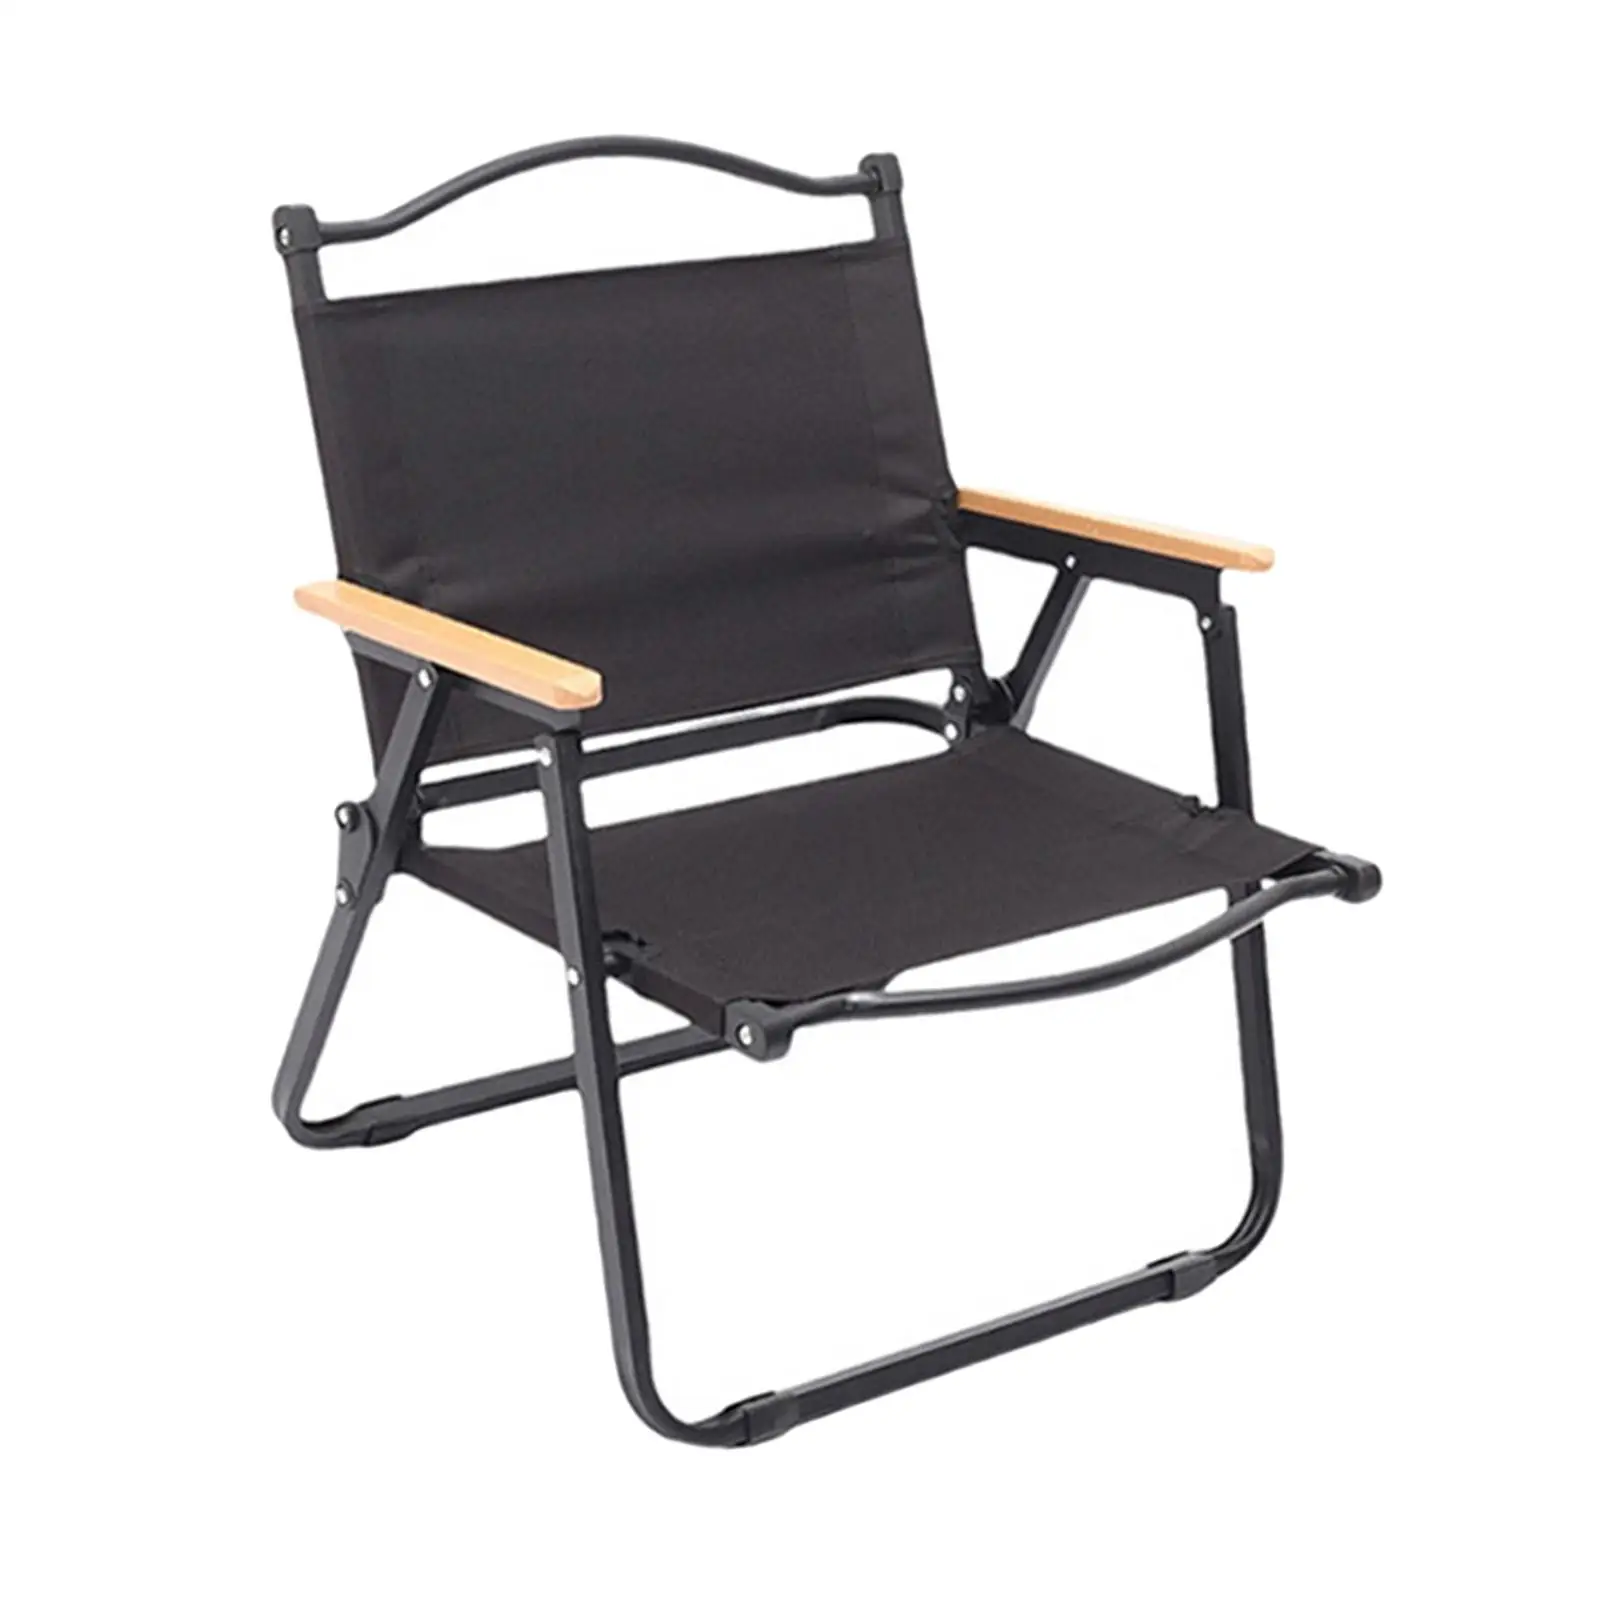 Camping Folding Chair Backrest Chair Lightweight Portable Holds 330lbs Heavy Duty Armchair for Park Concert Lawn Beach Garden